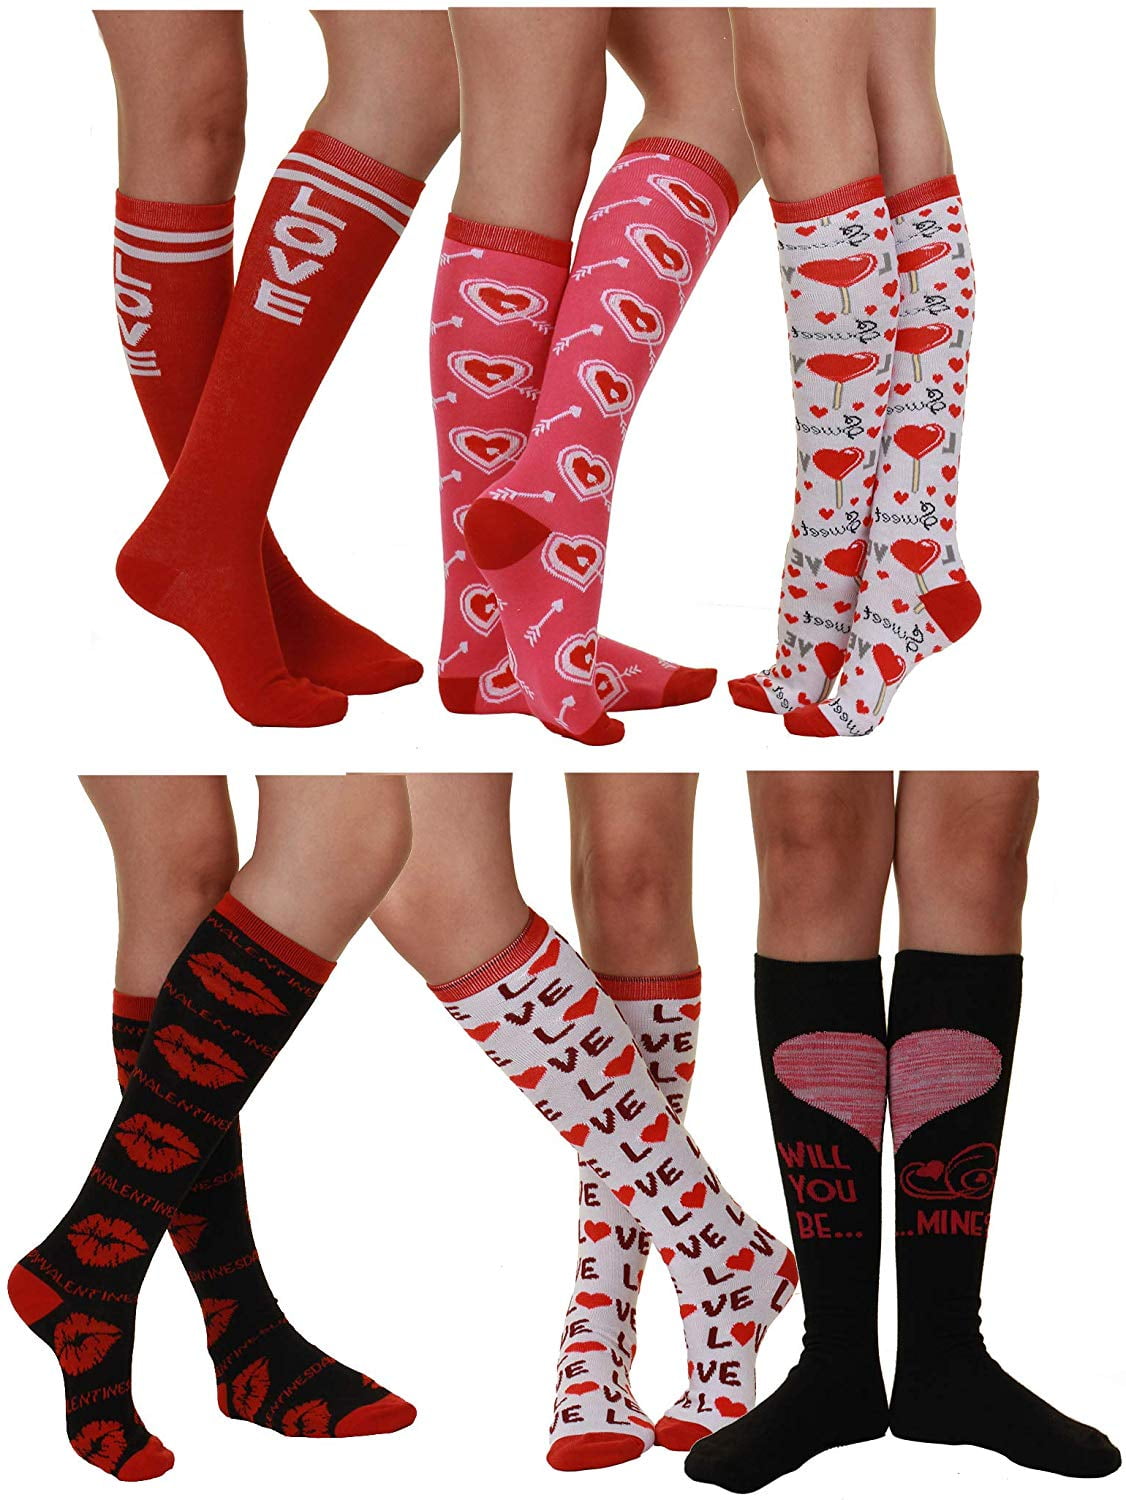 Gilbin Valentine's Day Soft Crew Socks Xoxo Kiss Hug Love Prints, Women's Size 9-11(6 Pairs) (Crew St2), Red